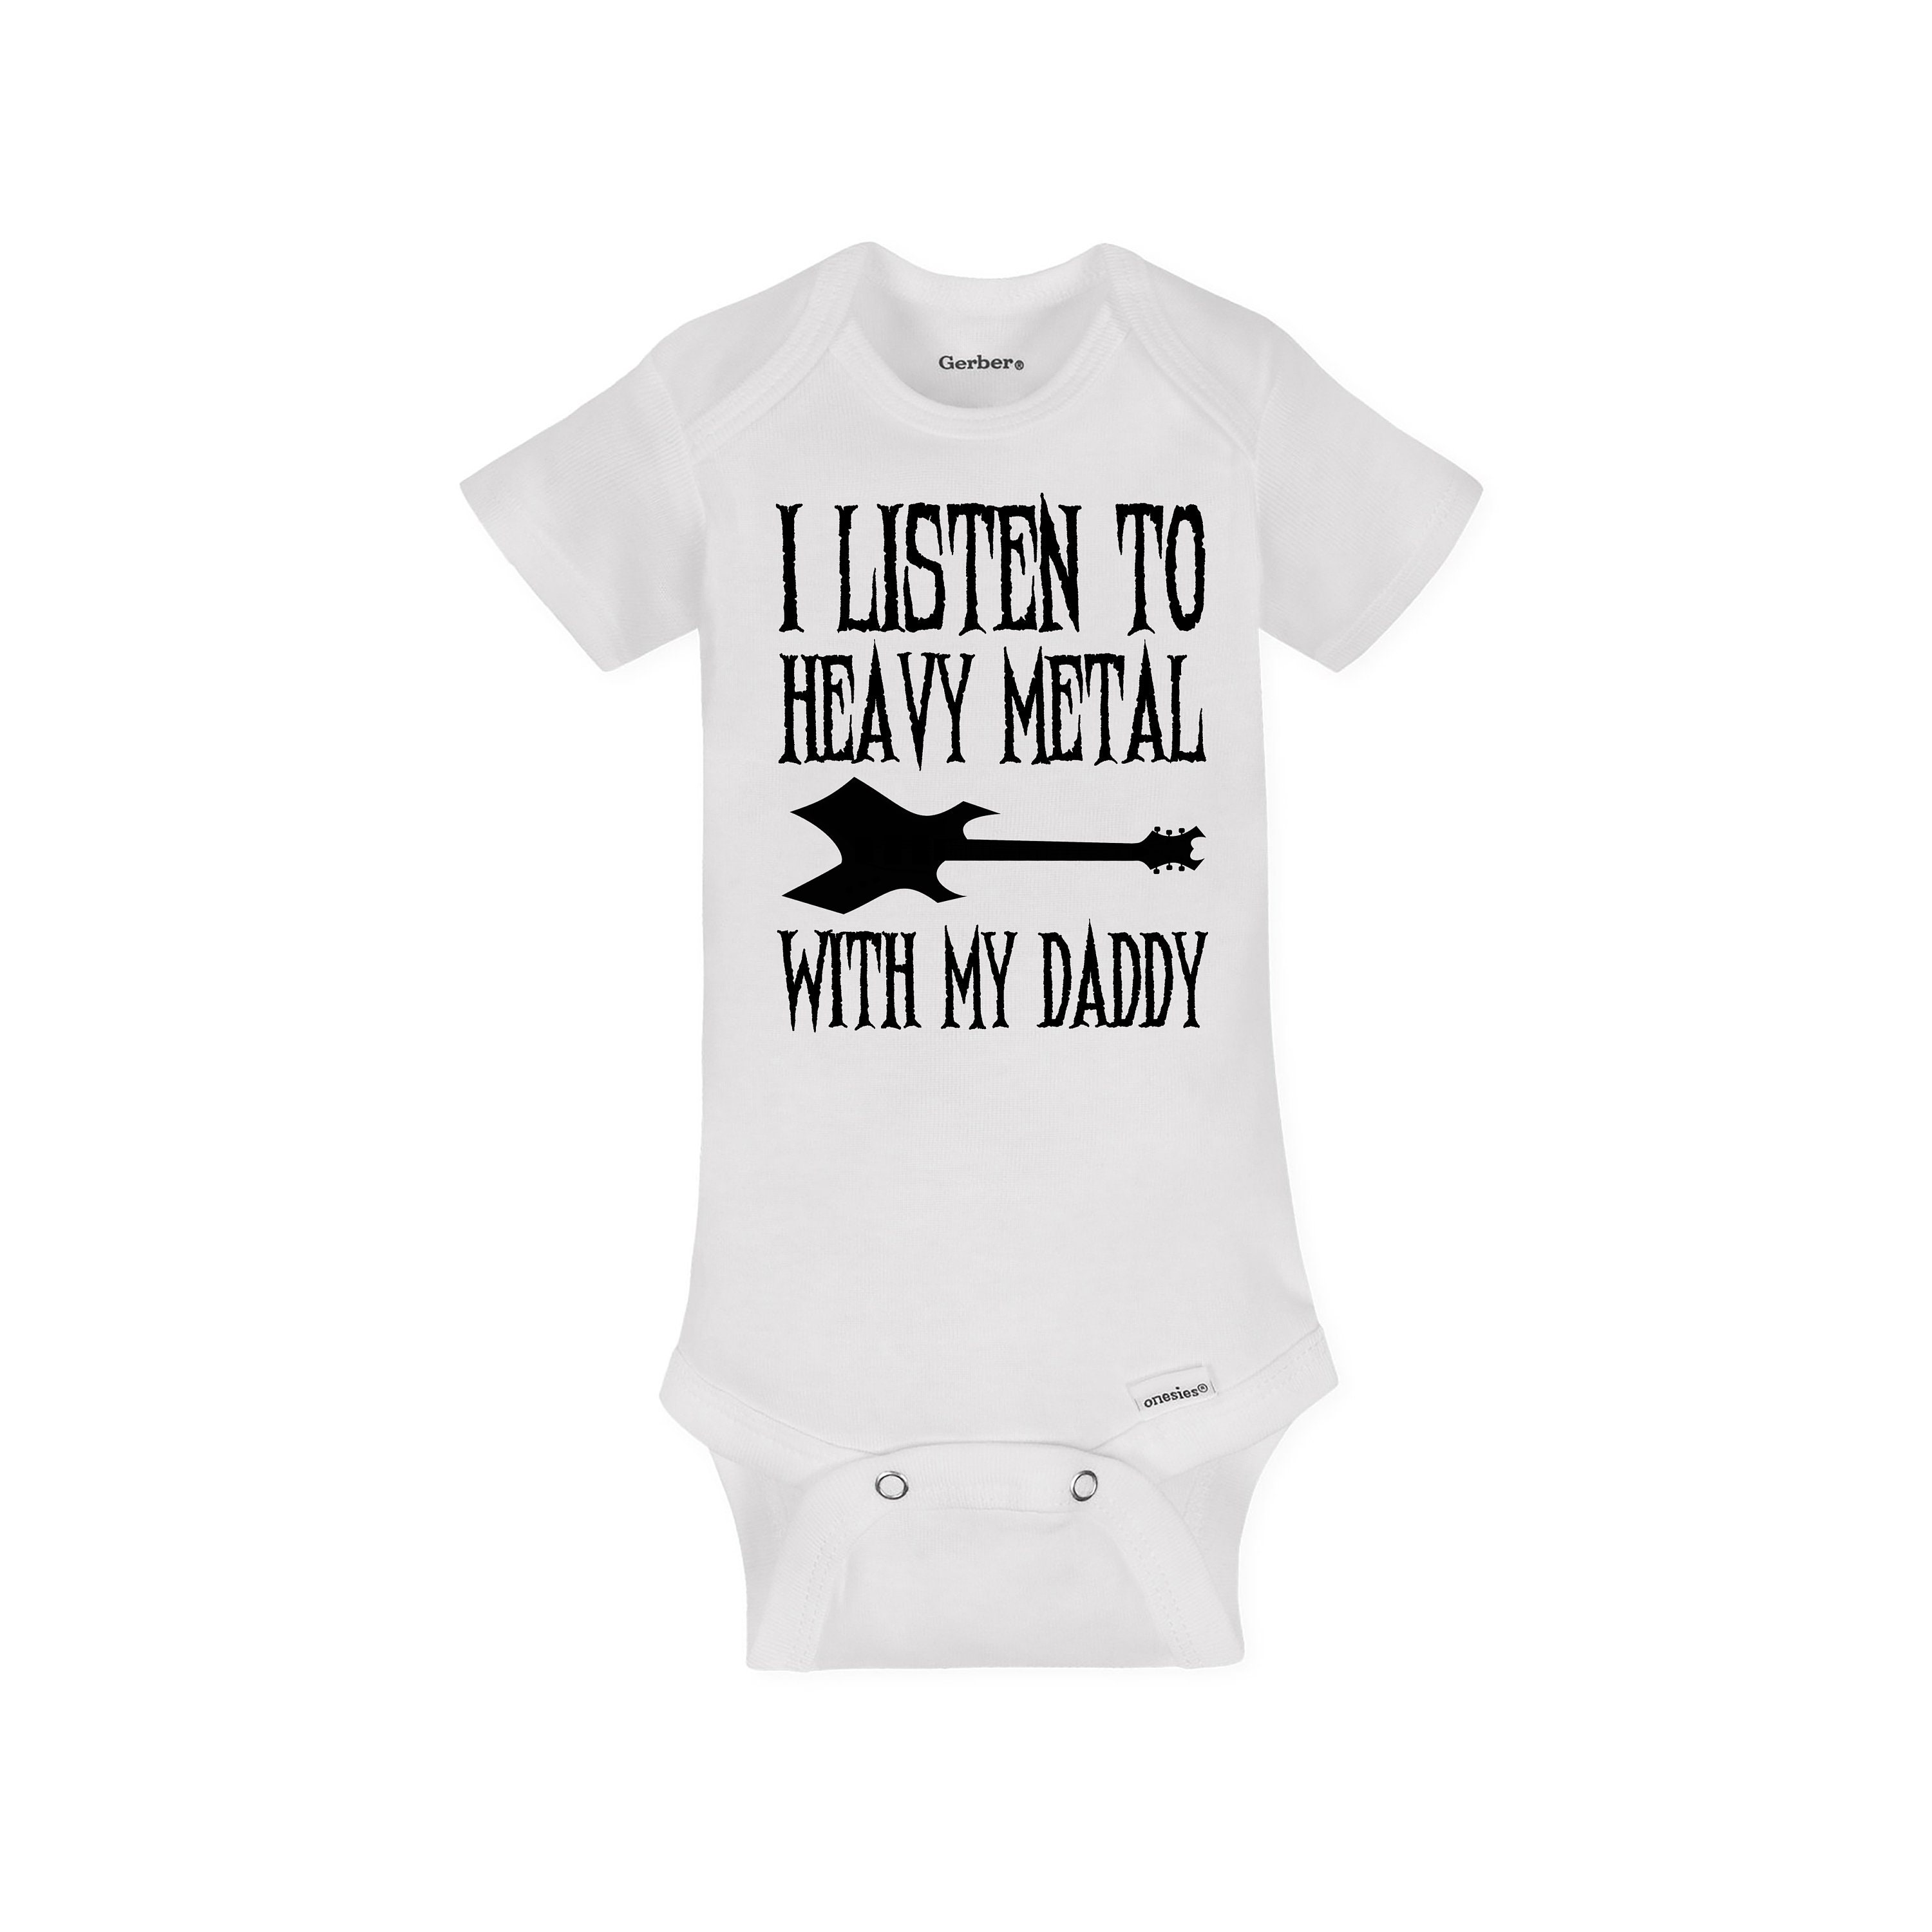 Grandpa Softball Buddy Baby Onesie Shirt Shower Gift Newborn Clothes Gerber 